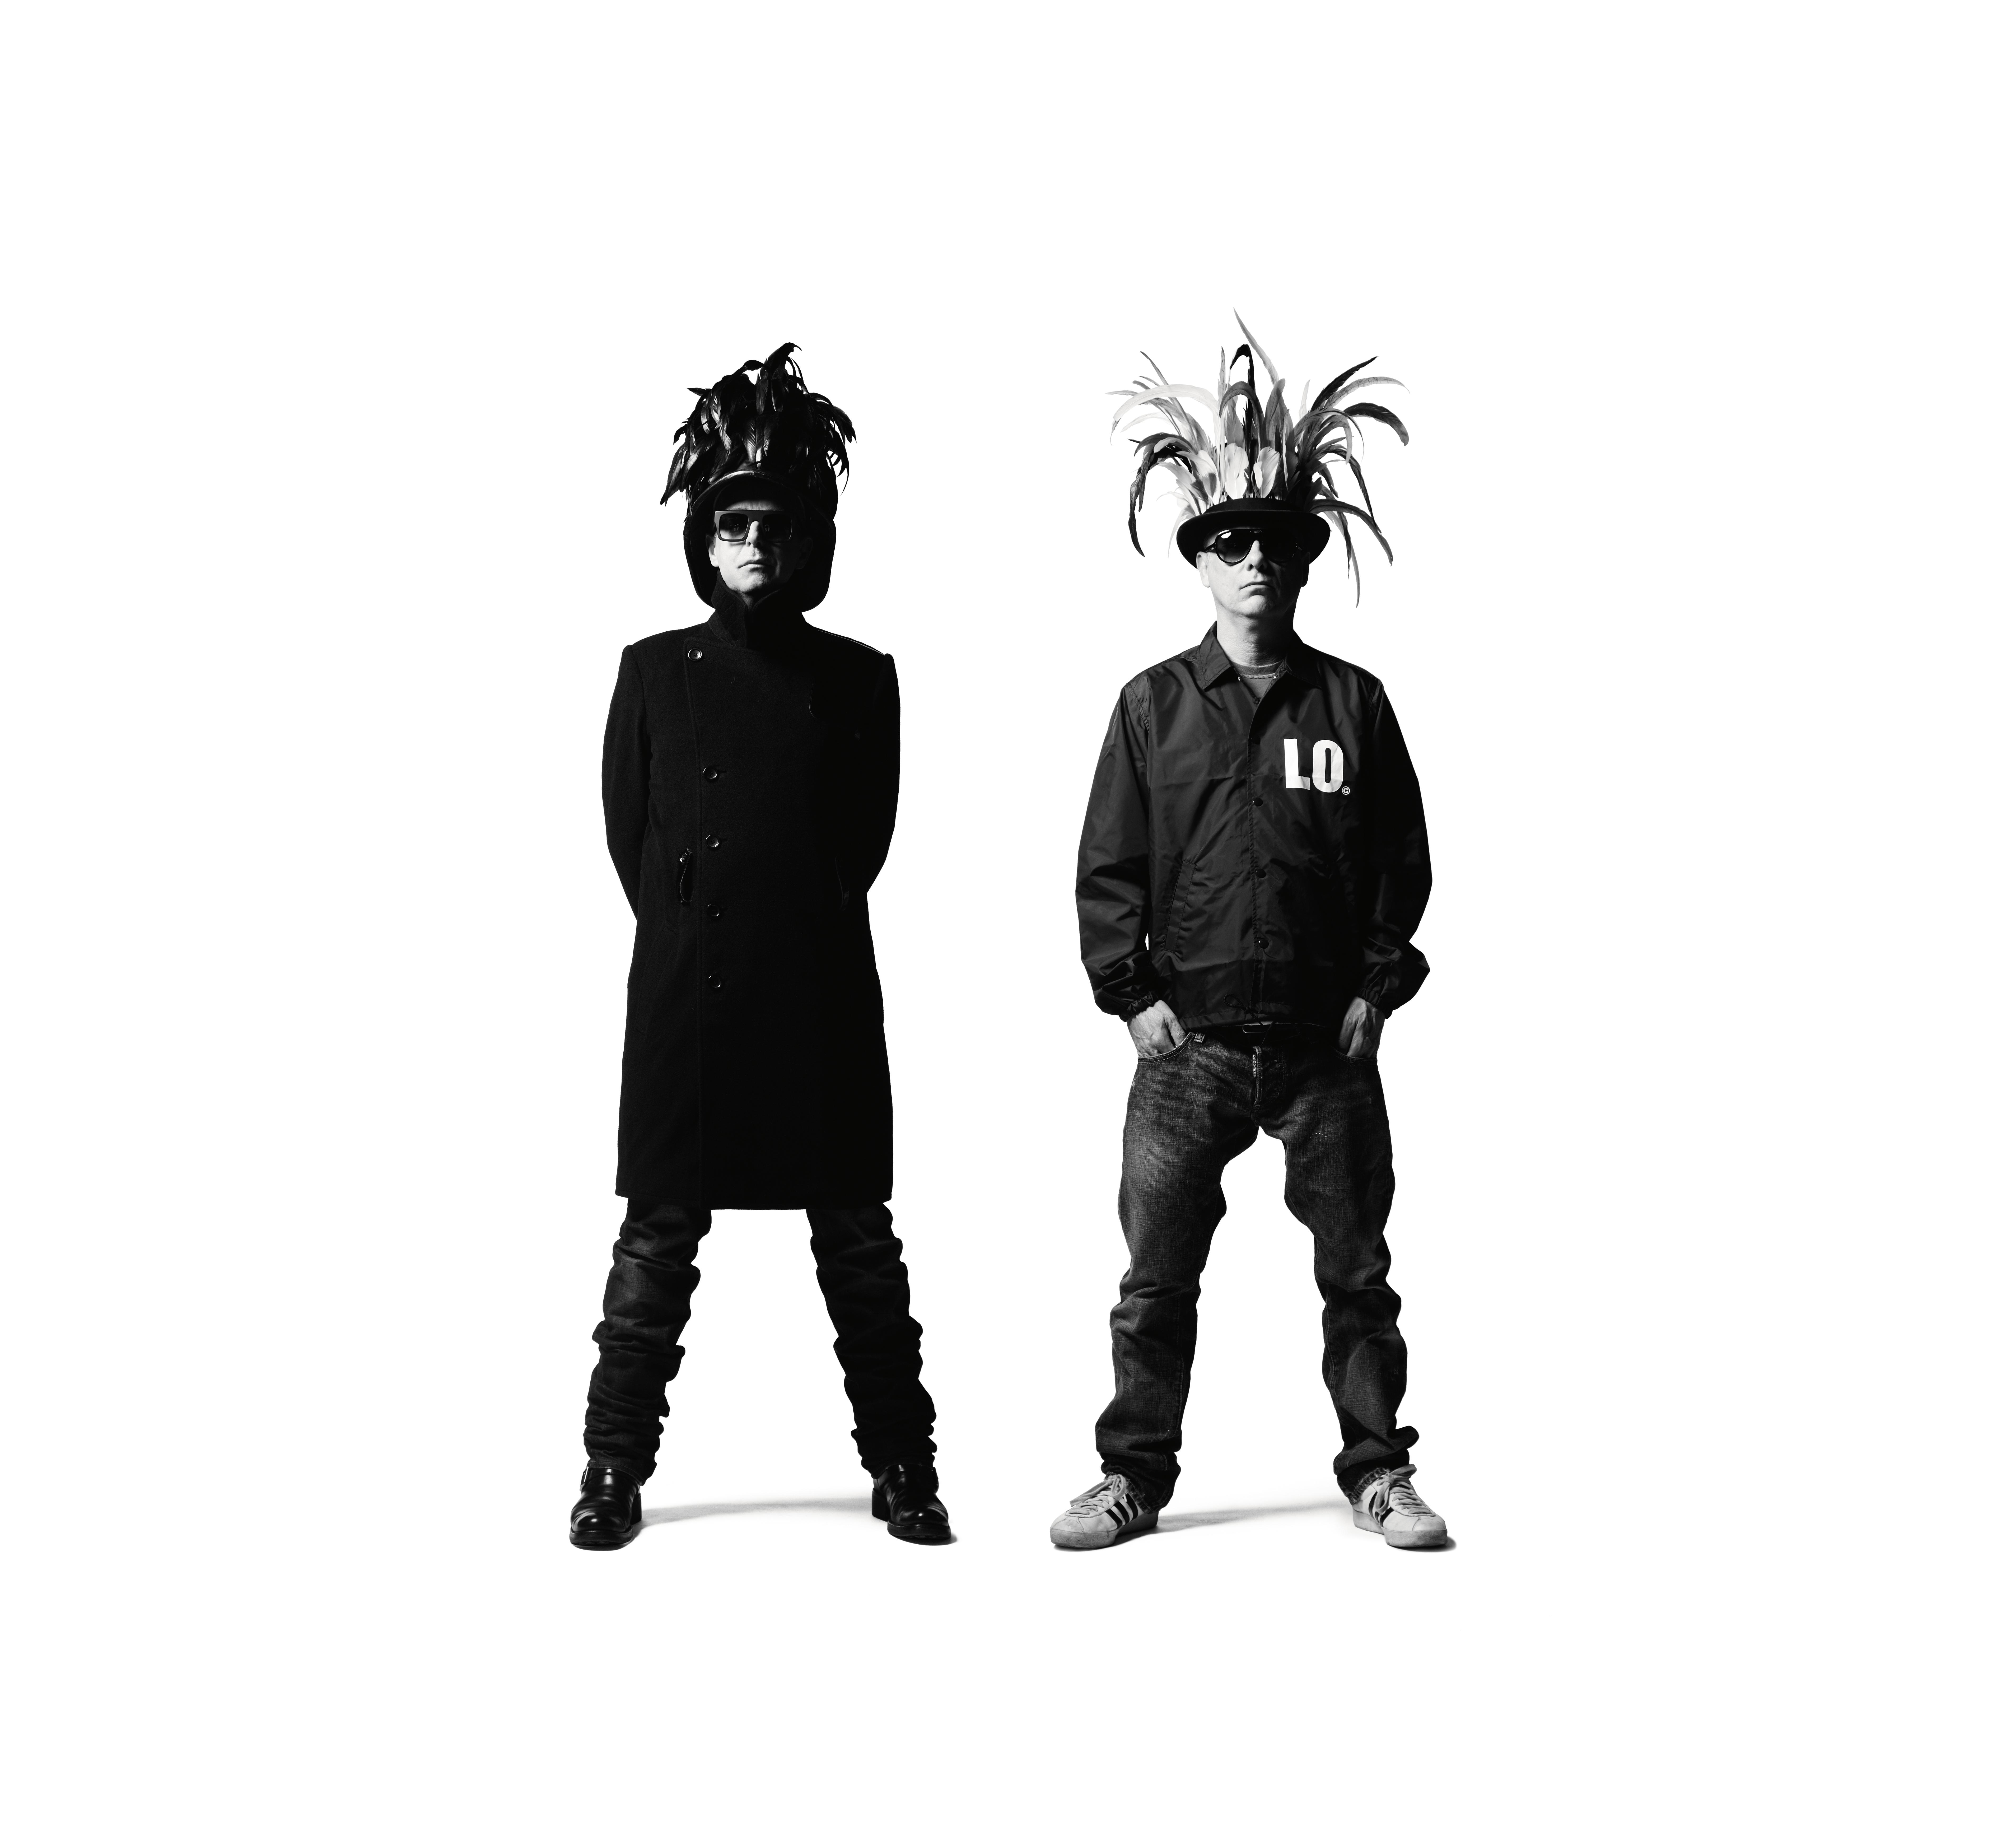 Nyt album fra Pet Shop Boys